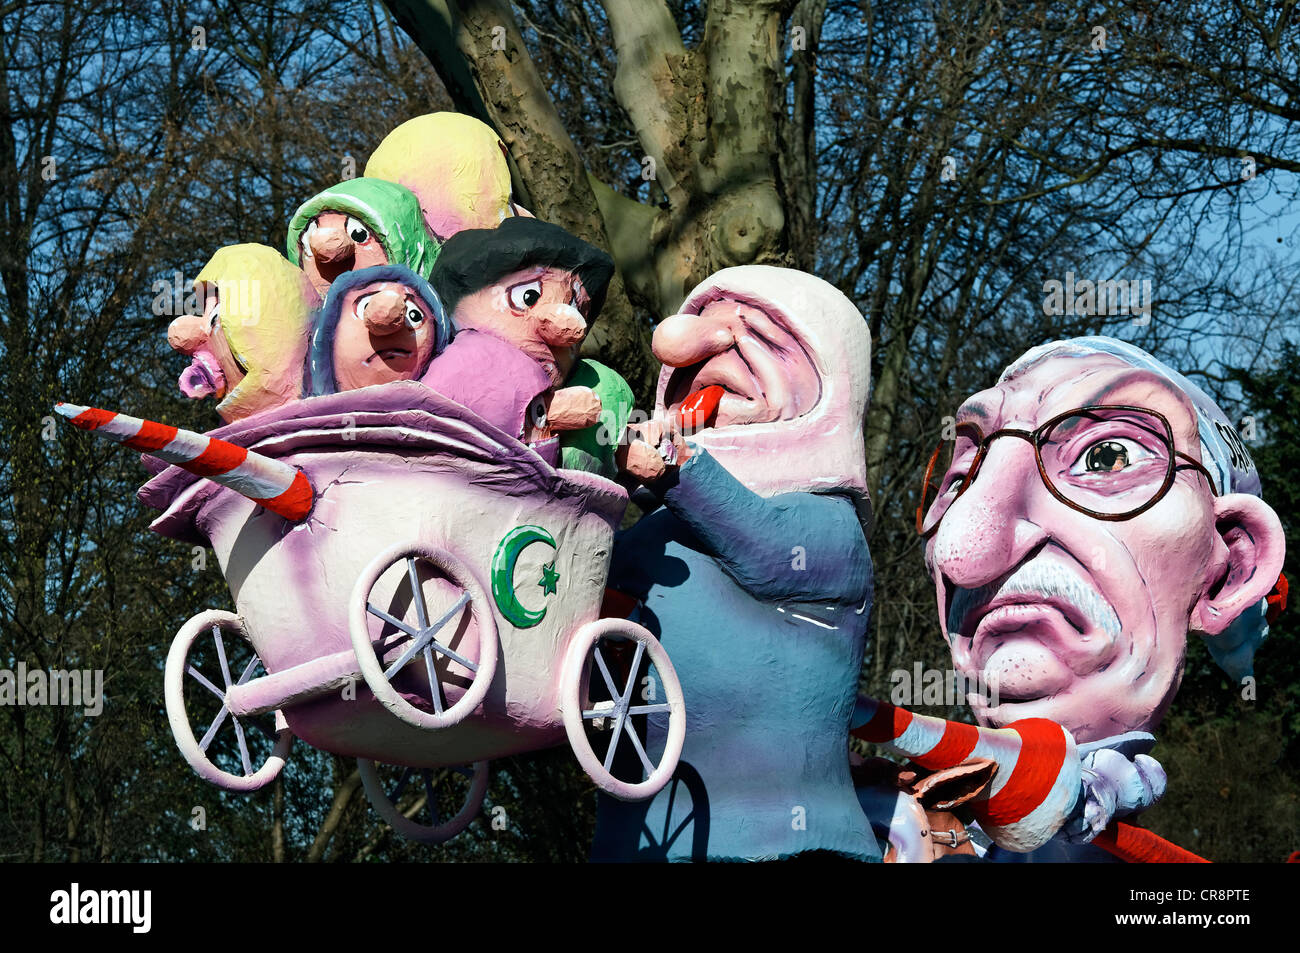 Thilo Sarrazin, impaling Turkish migrants, paper-mache figures, satirical themed parade float at the Rosenmontagszug Carnival Stock Photo